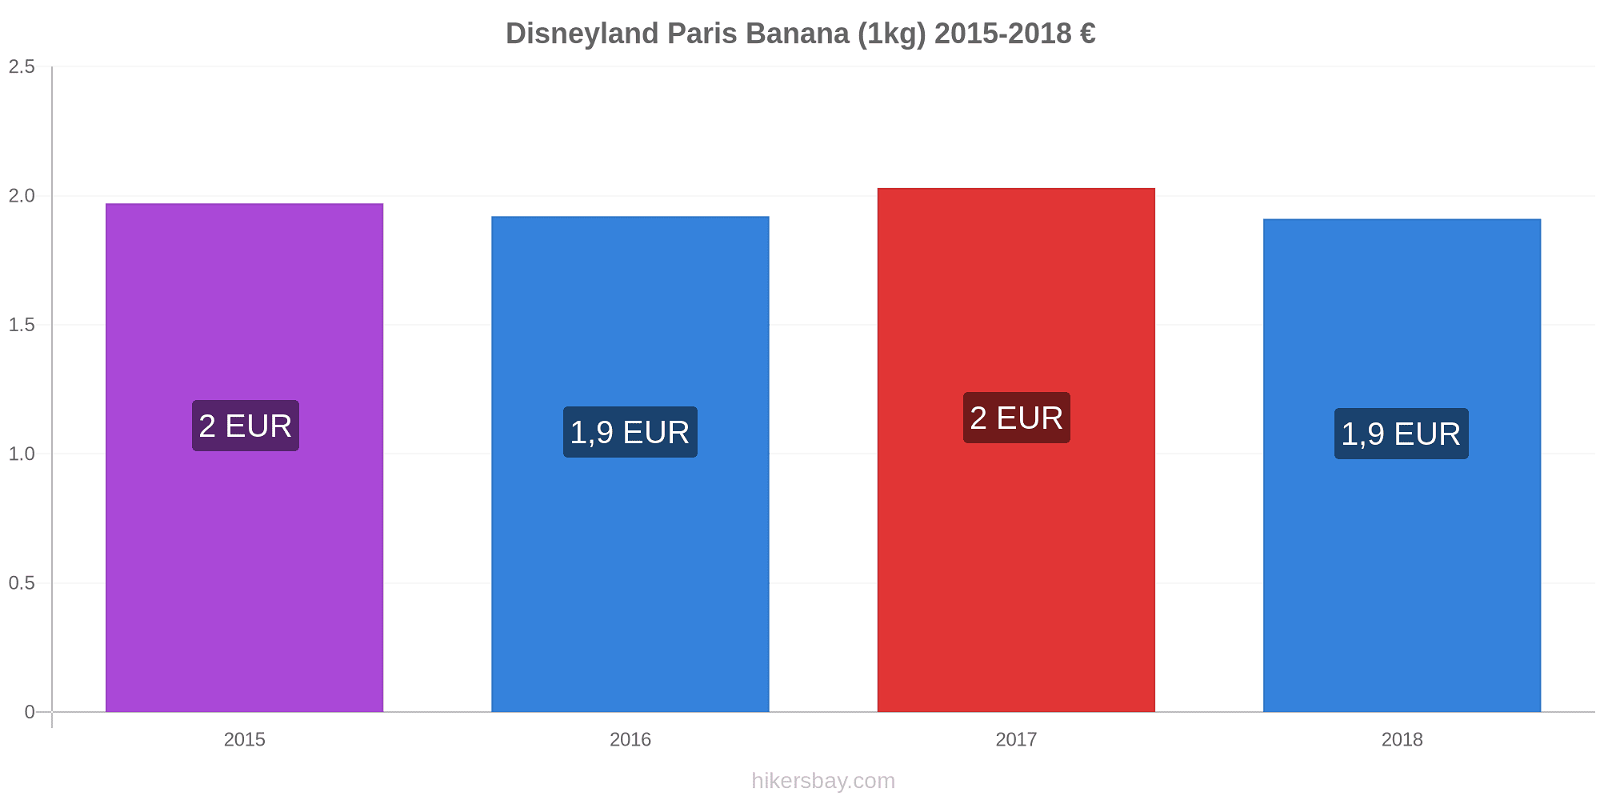 Disneyland Paris modificări de preț Banana (1kg) hikersbay.com